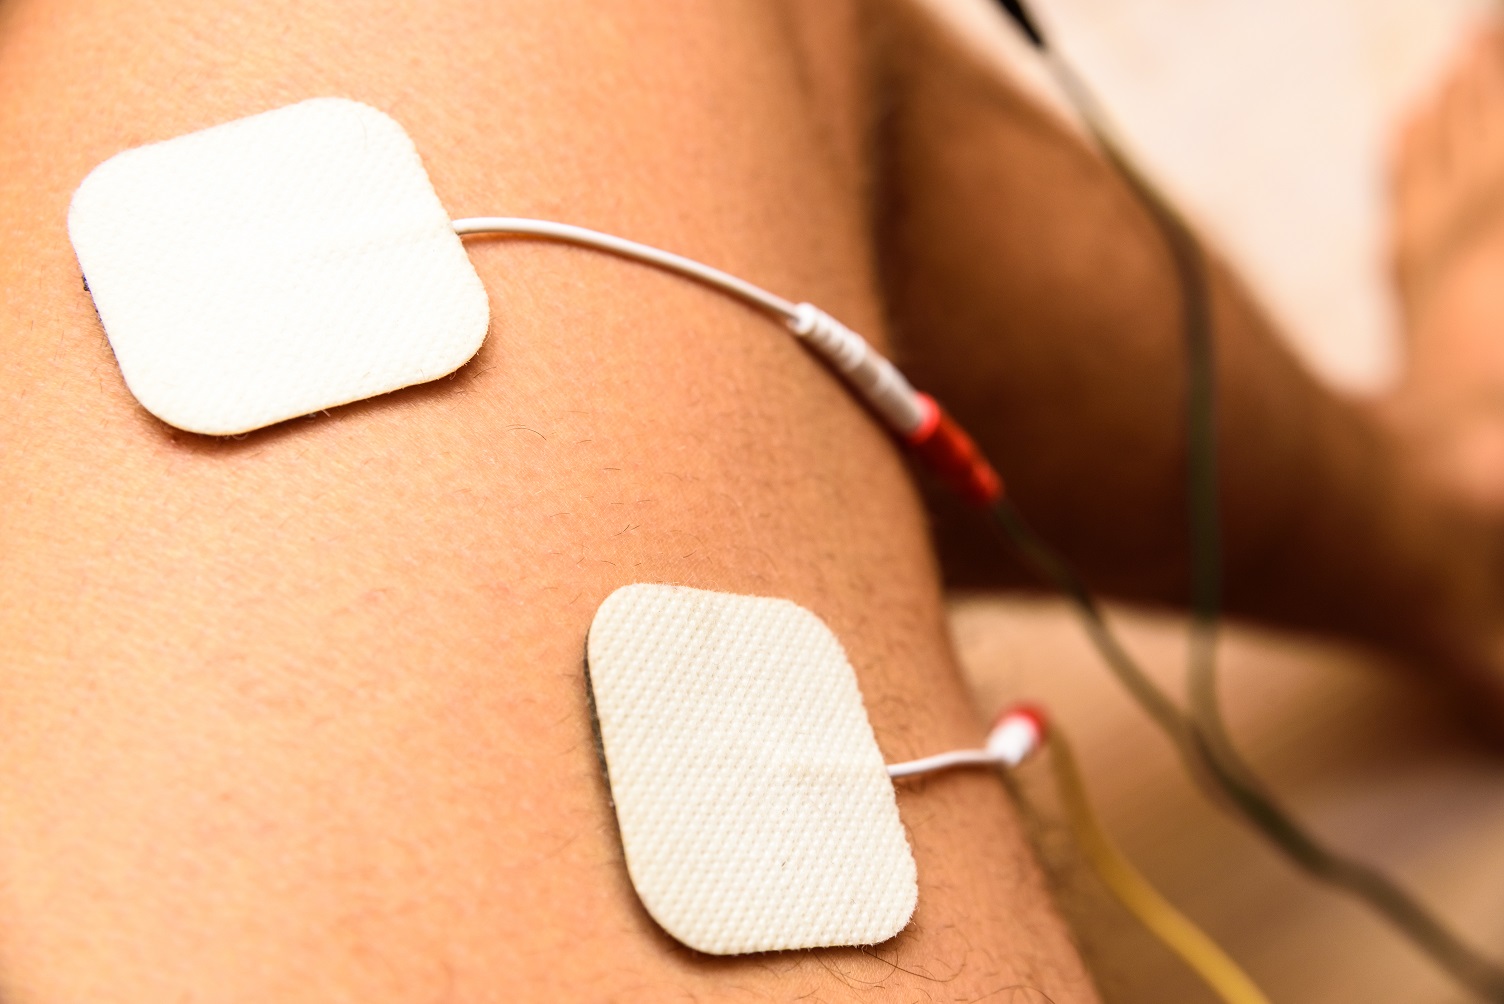 injured athlete applies ems electrodes to his legs